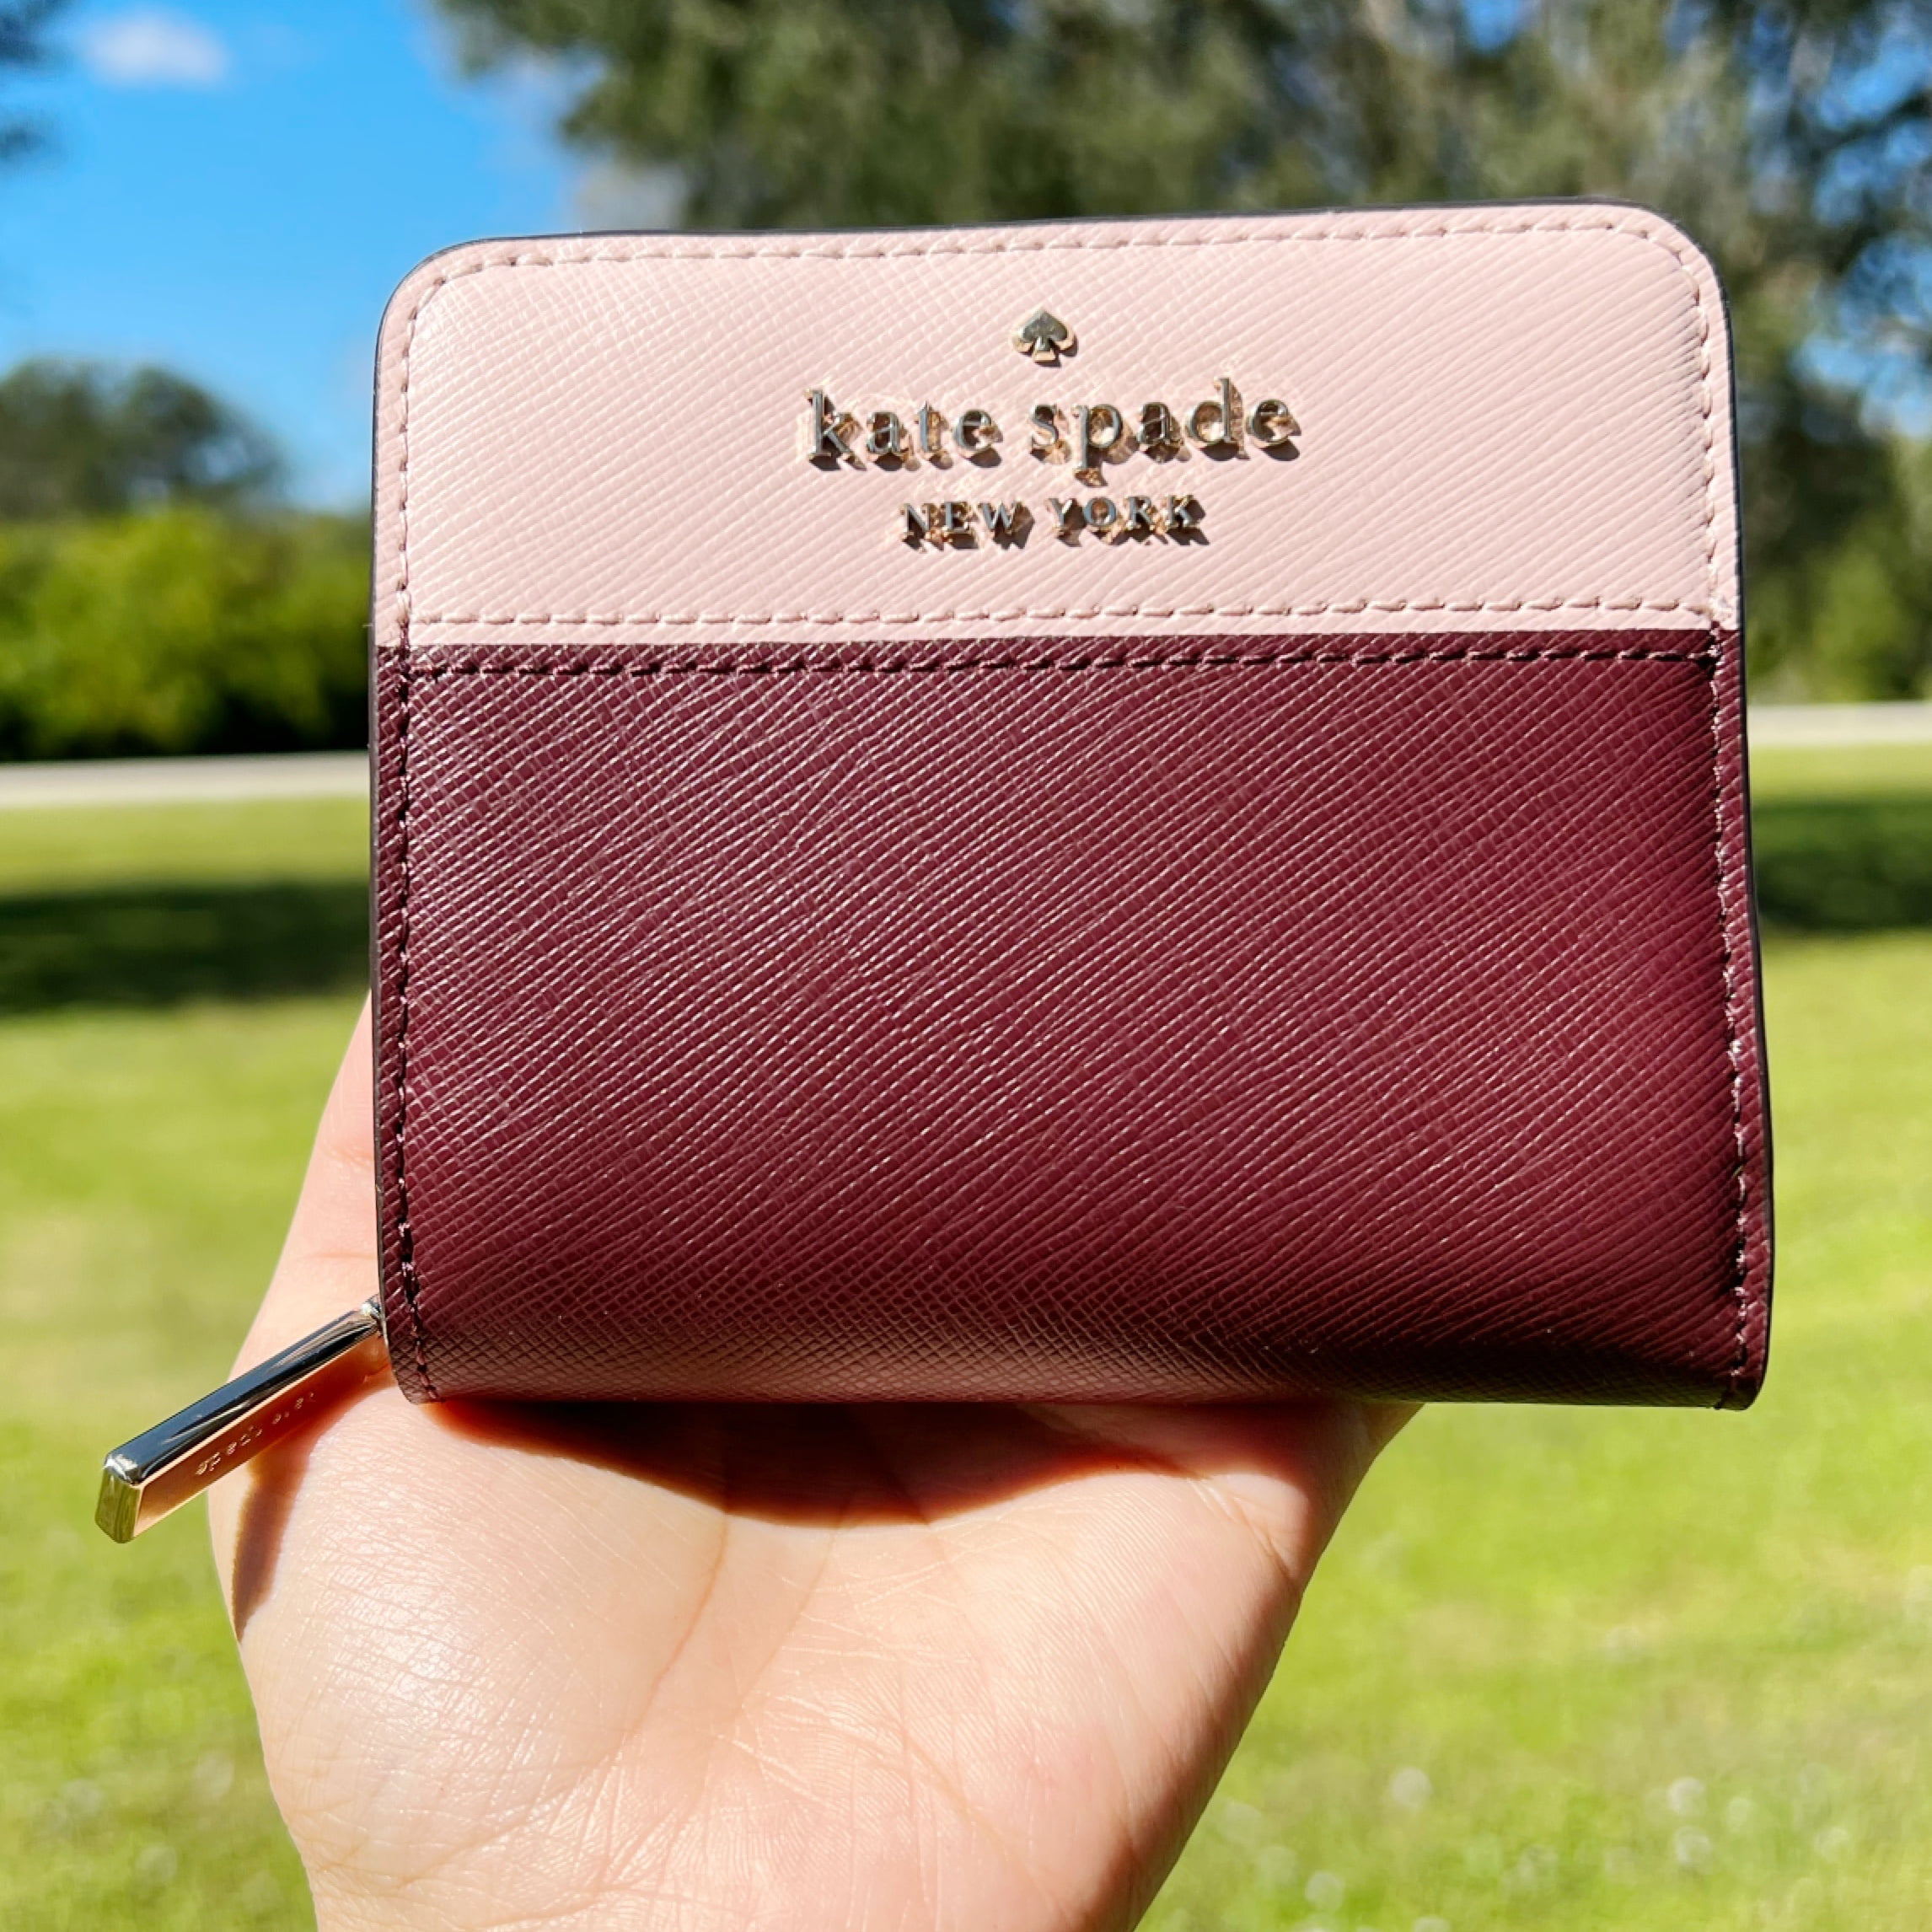 Kate Spade Staci Colorblock Printed Small Zip Around Wallet